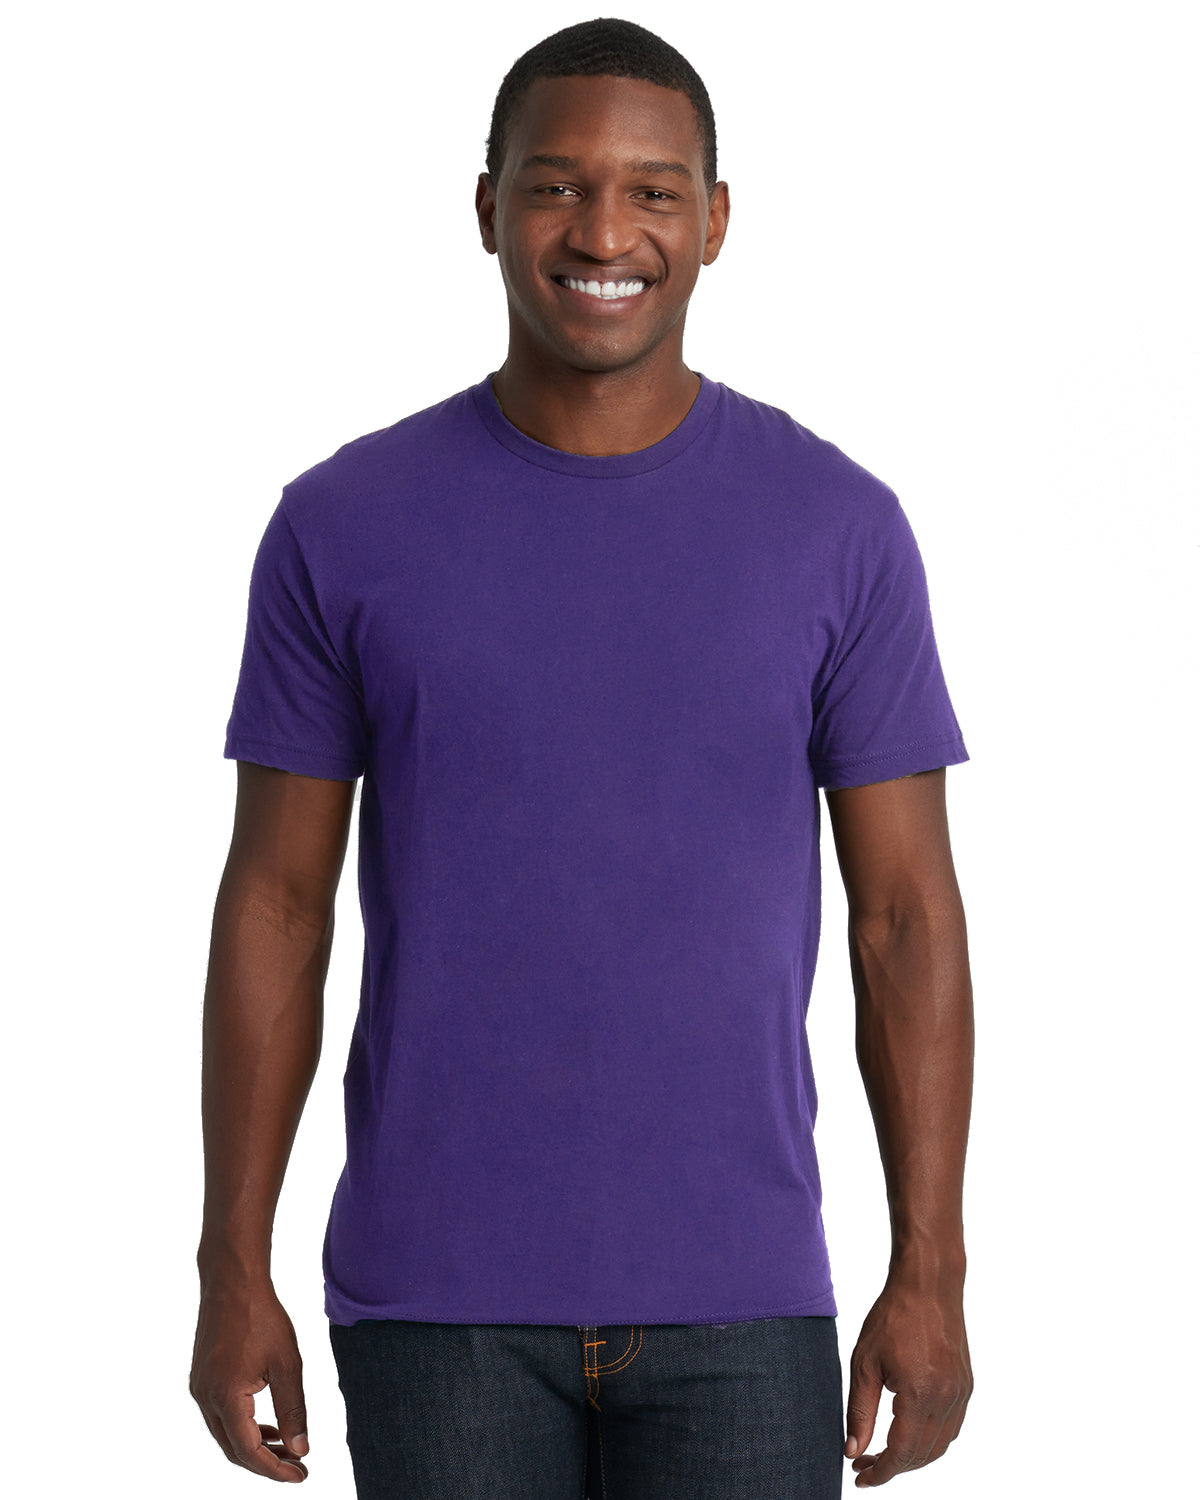 model wearing next level unisex cotton tee in purple rush